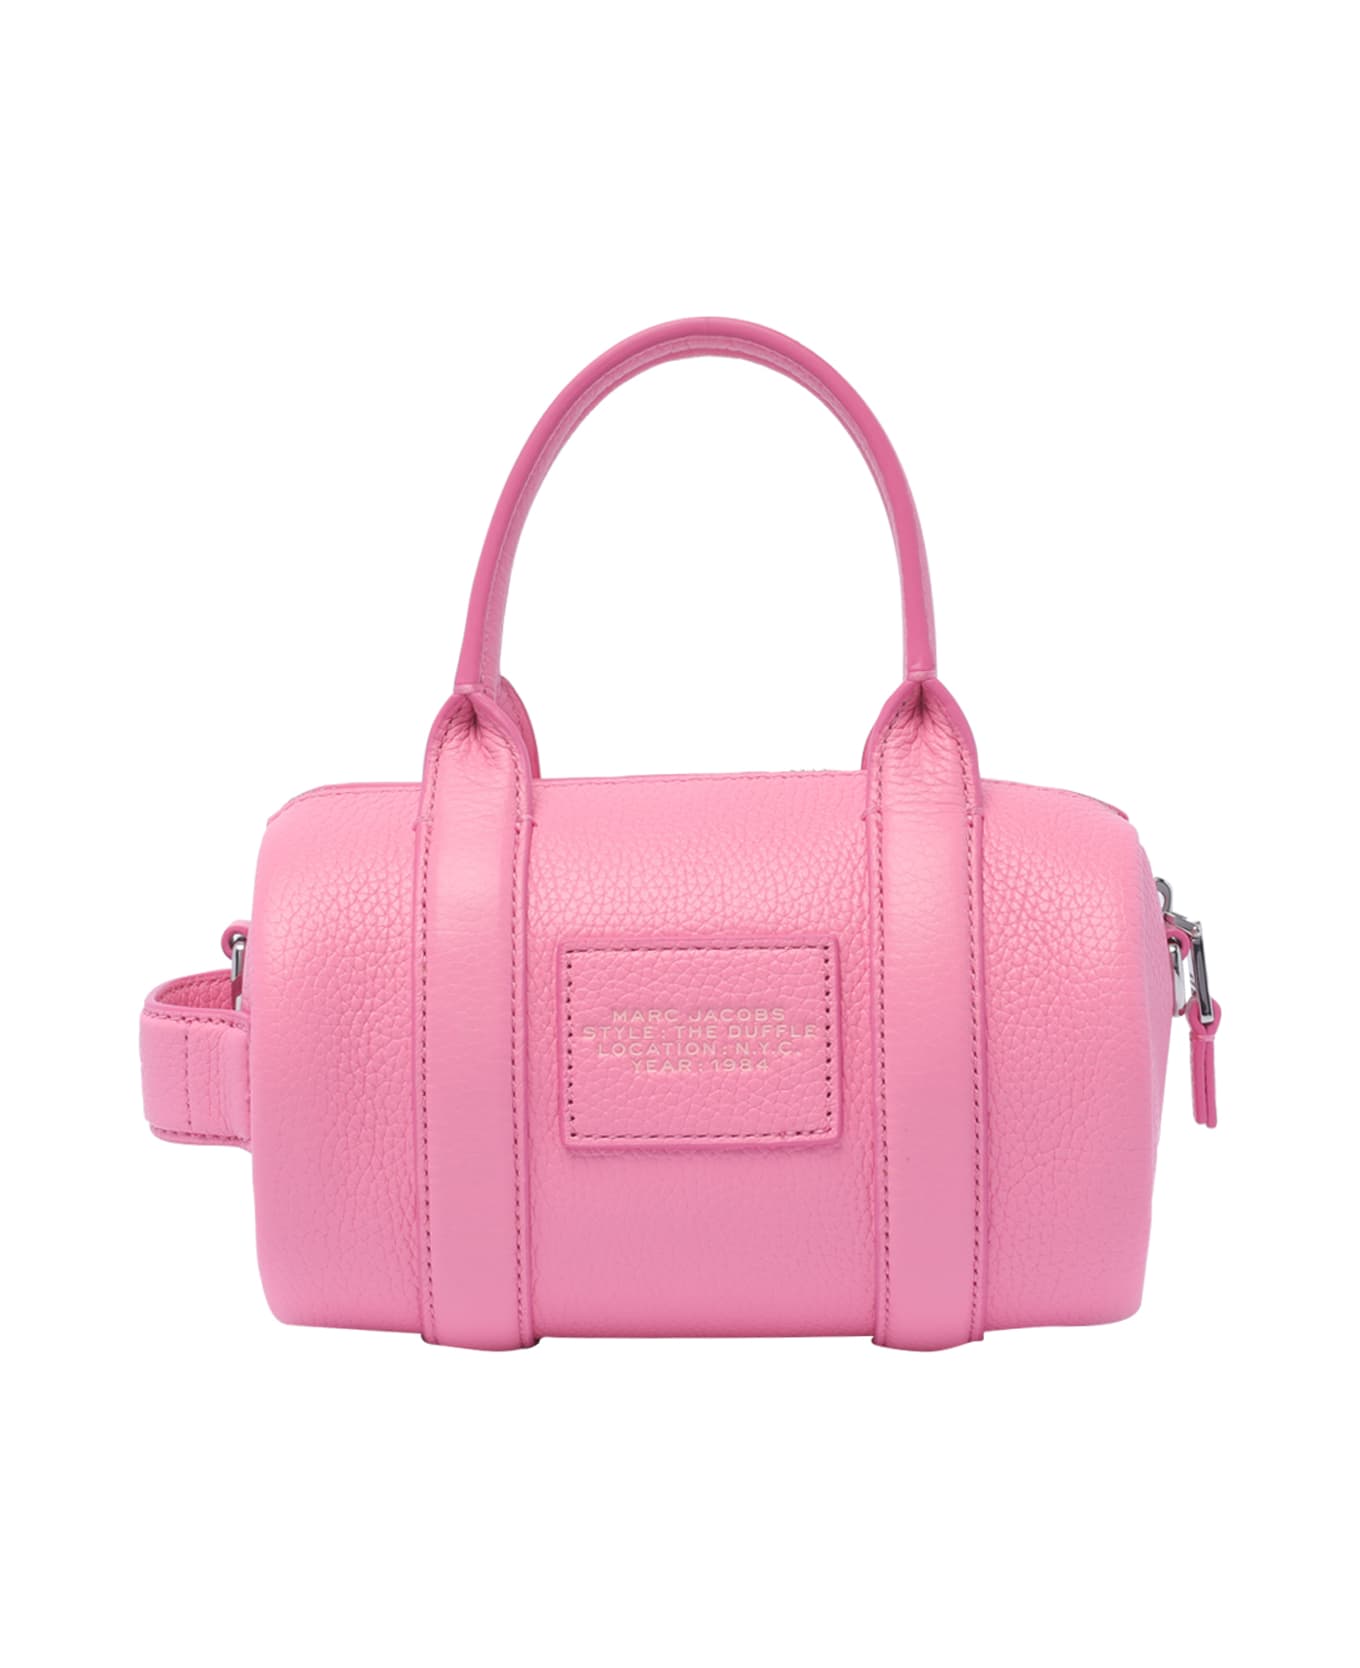 Marc Jacobs The Mini Duffle Bag - Petal pink トートバッグ